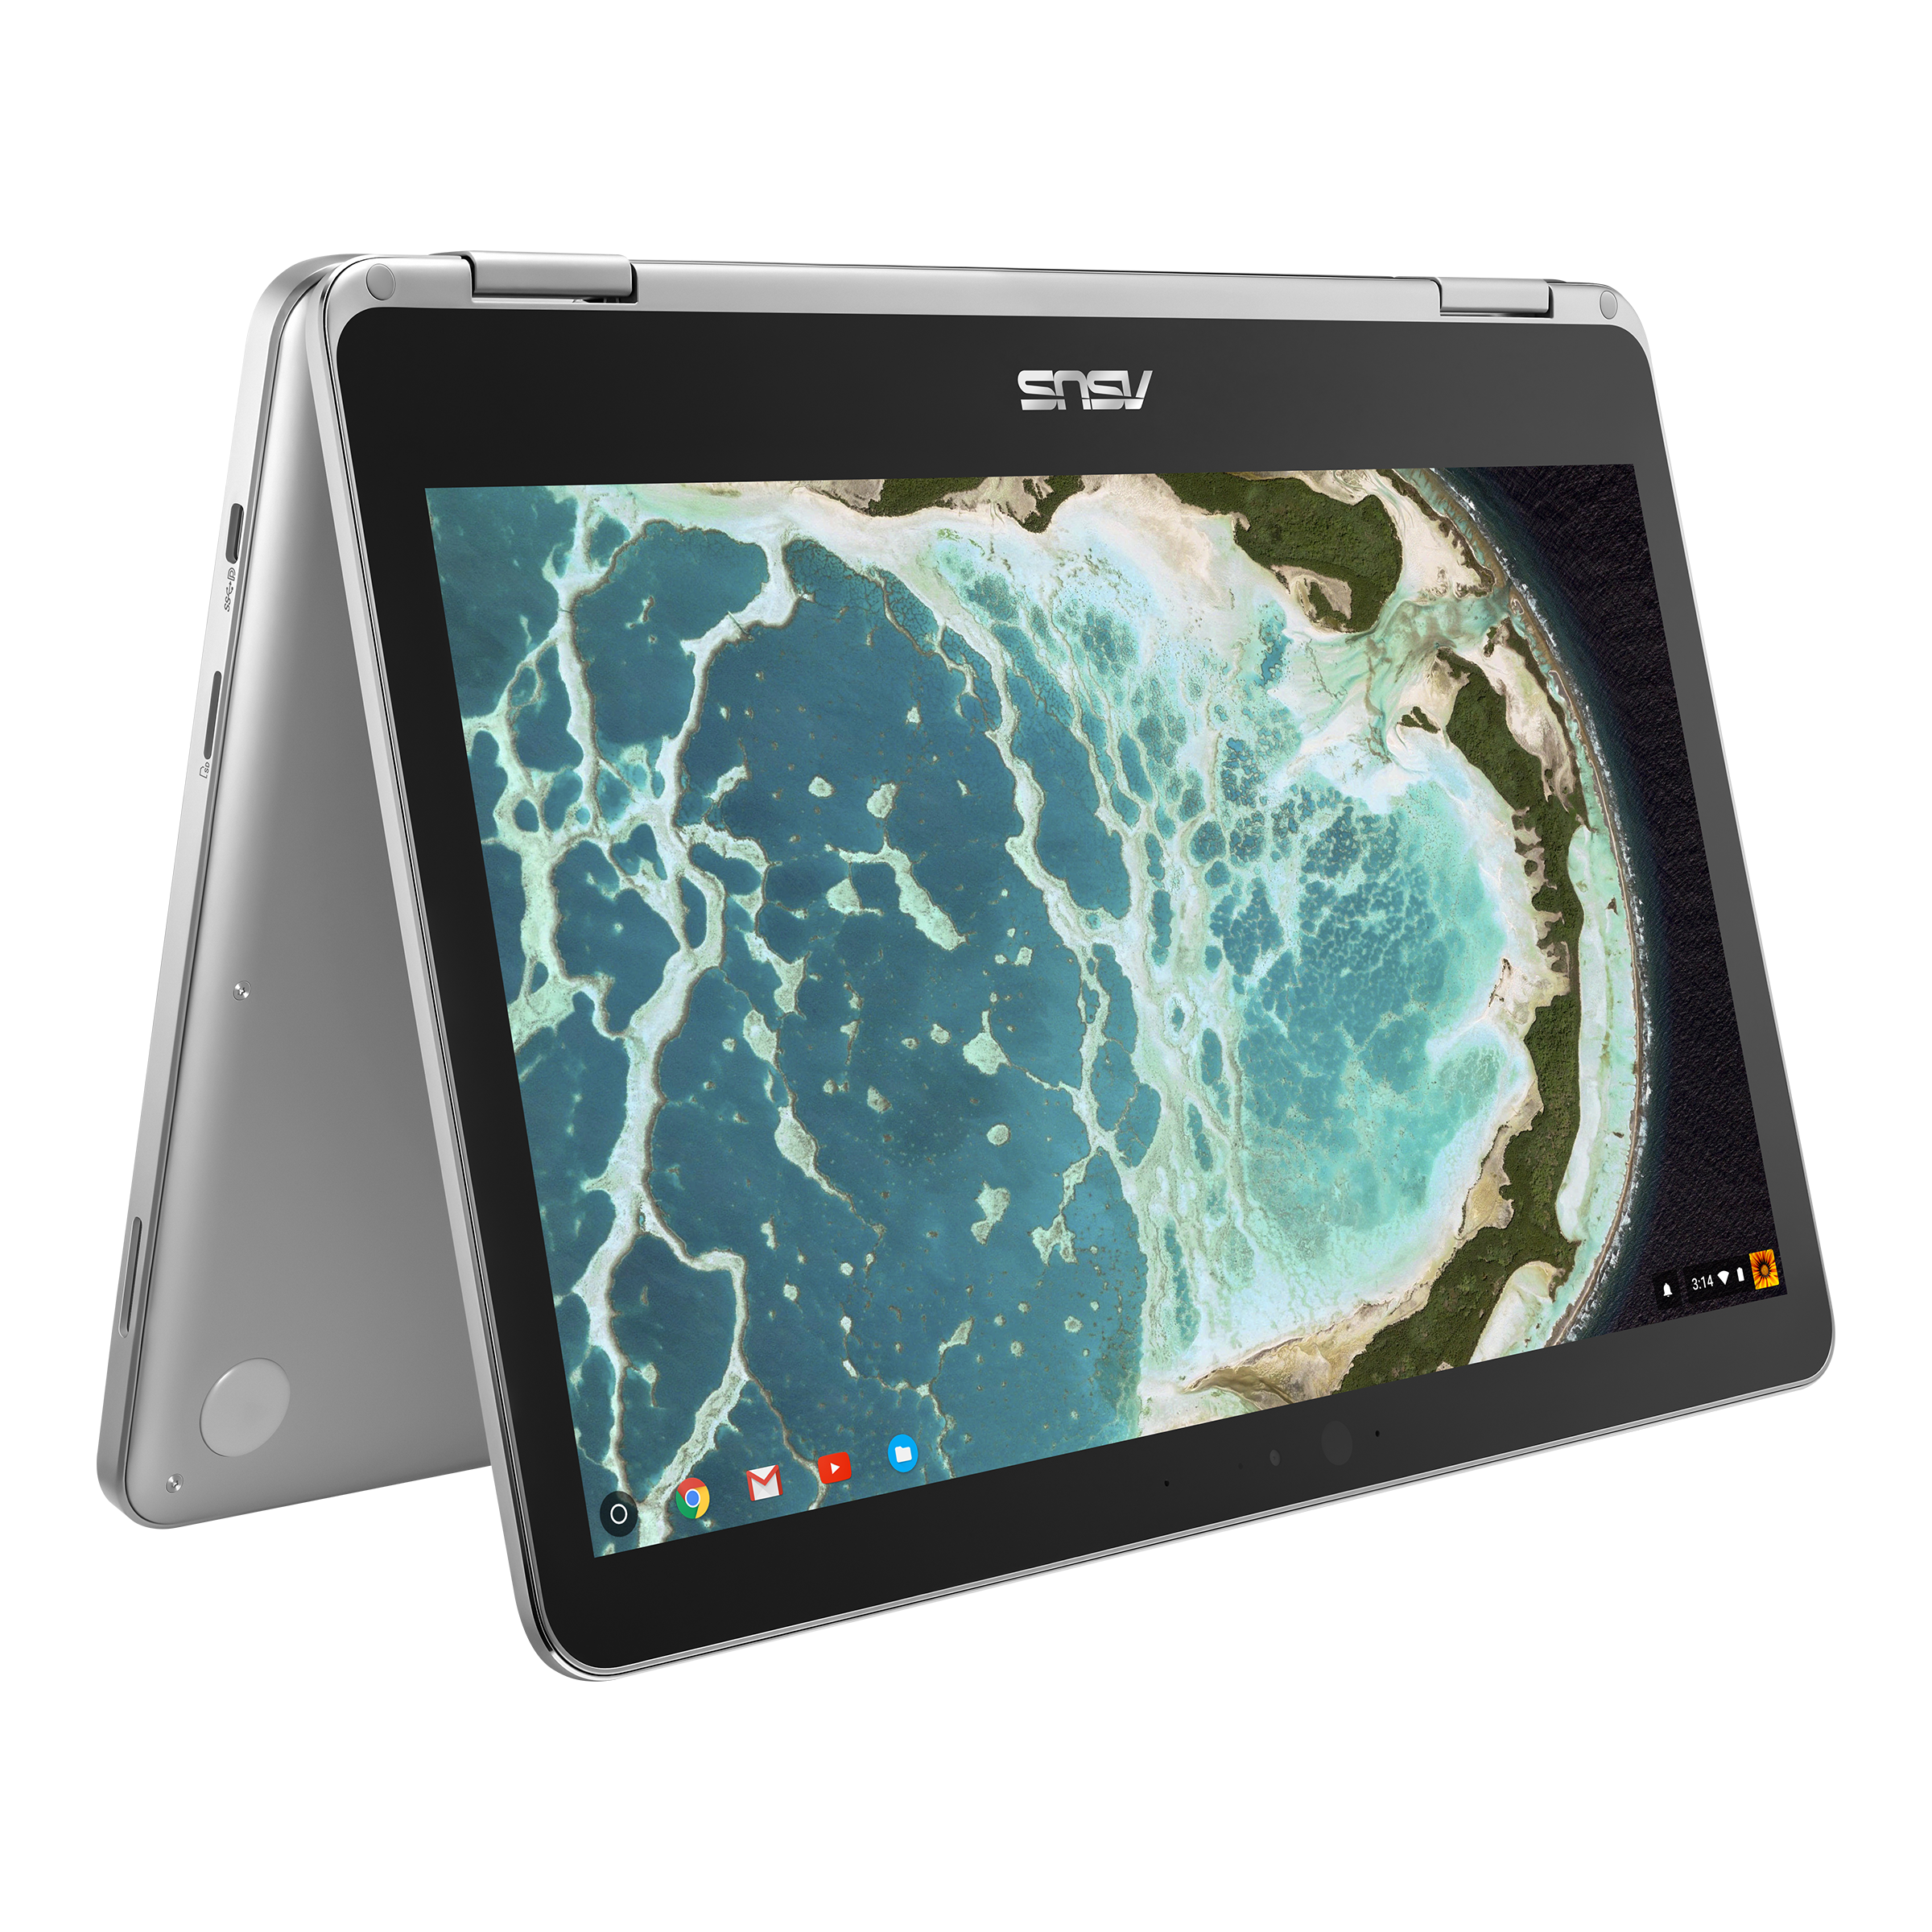 ASUS Chromebook Flip C302｜Laptops For Home｜ASUS Global